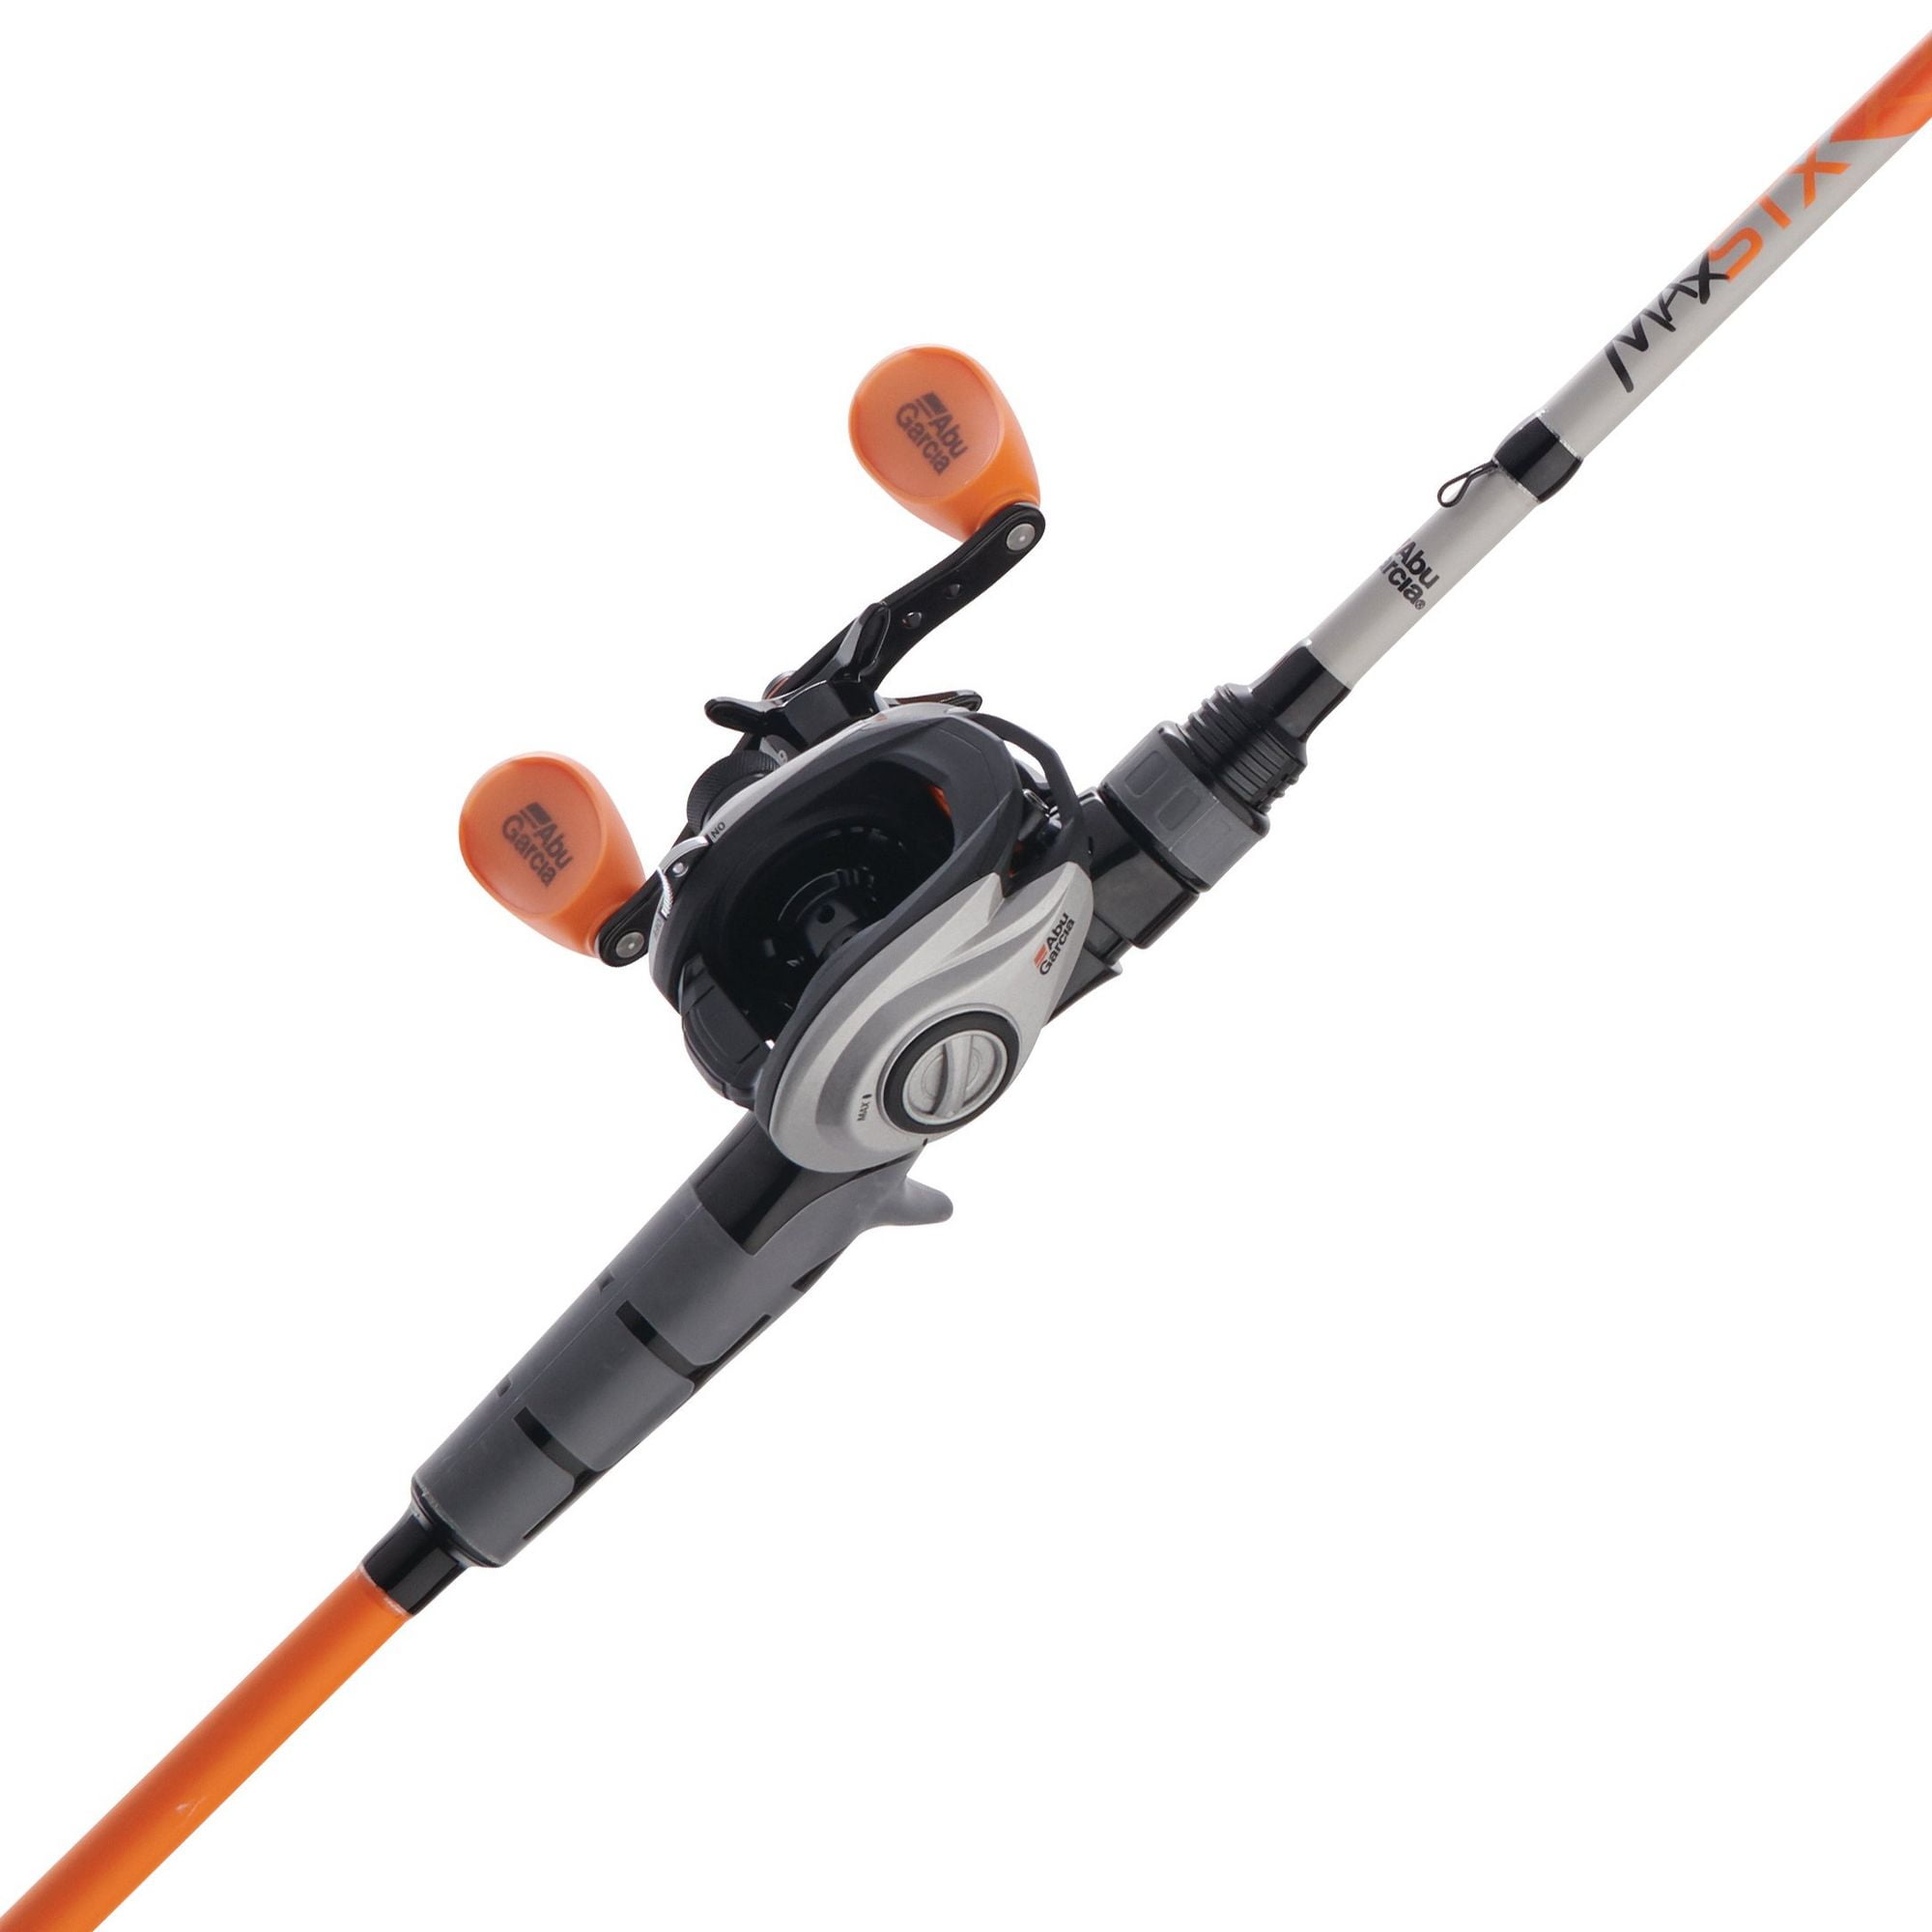 Abu Garcia 6’6” Max STX Fishing Rod and Reel Baitcast Combo